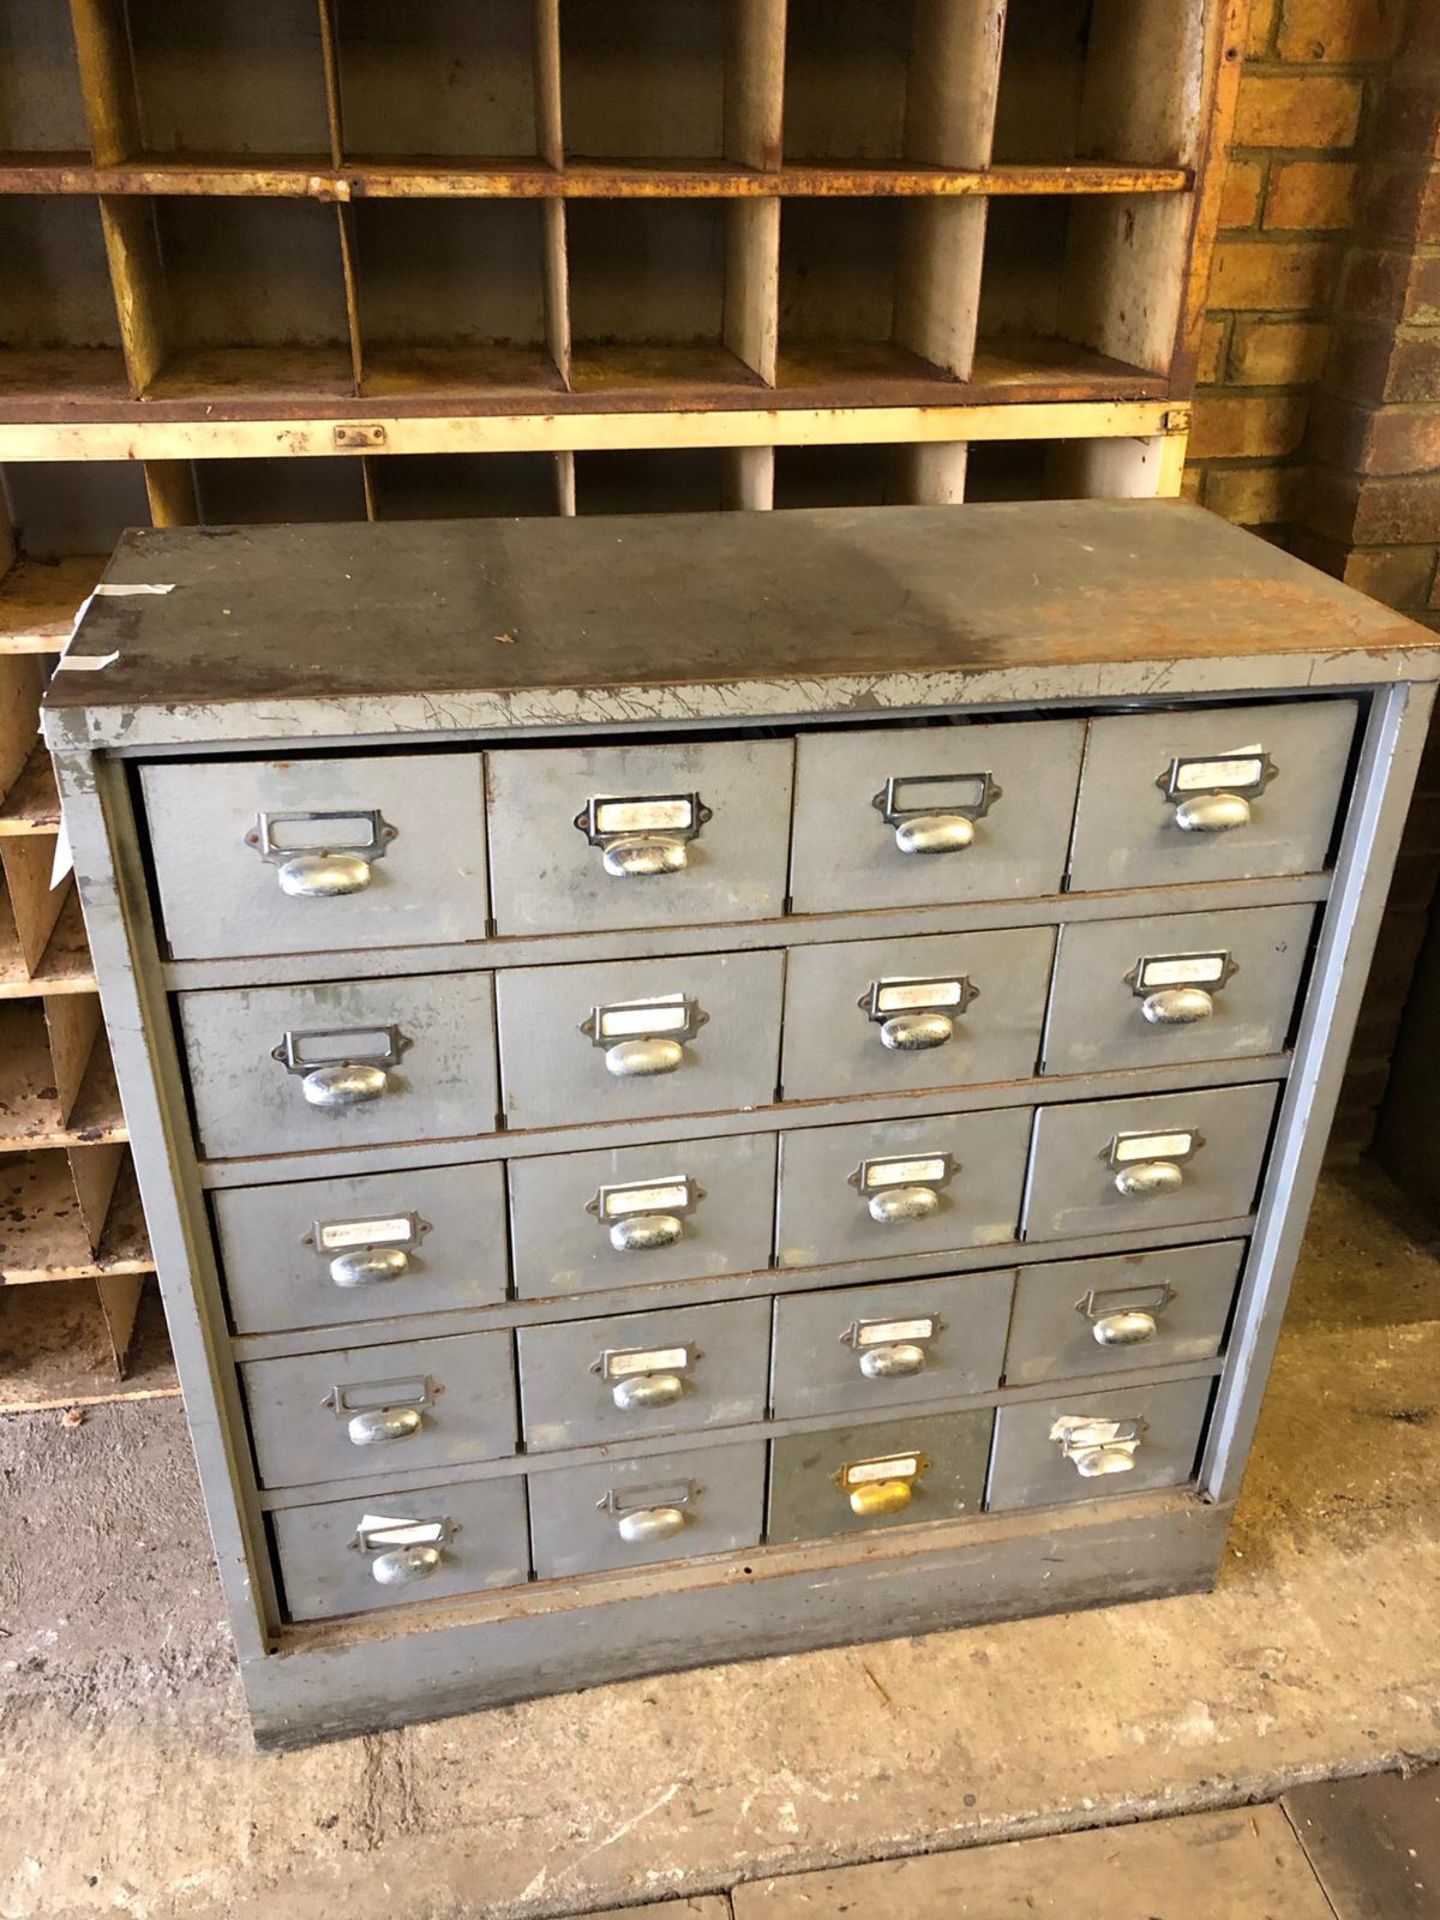 Metal Cabinet and Drawers - Height 97cm x Width 92cm x Depth 42cm. Stored Gorleston, Norfolk.